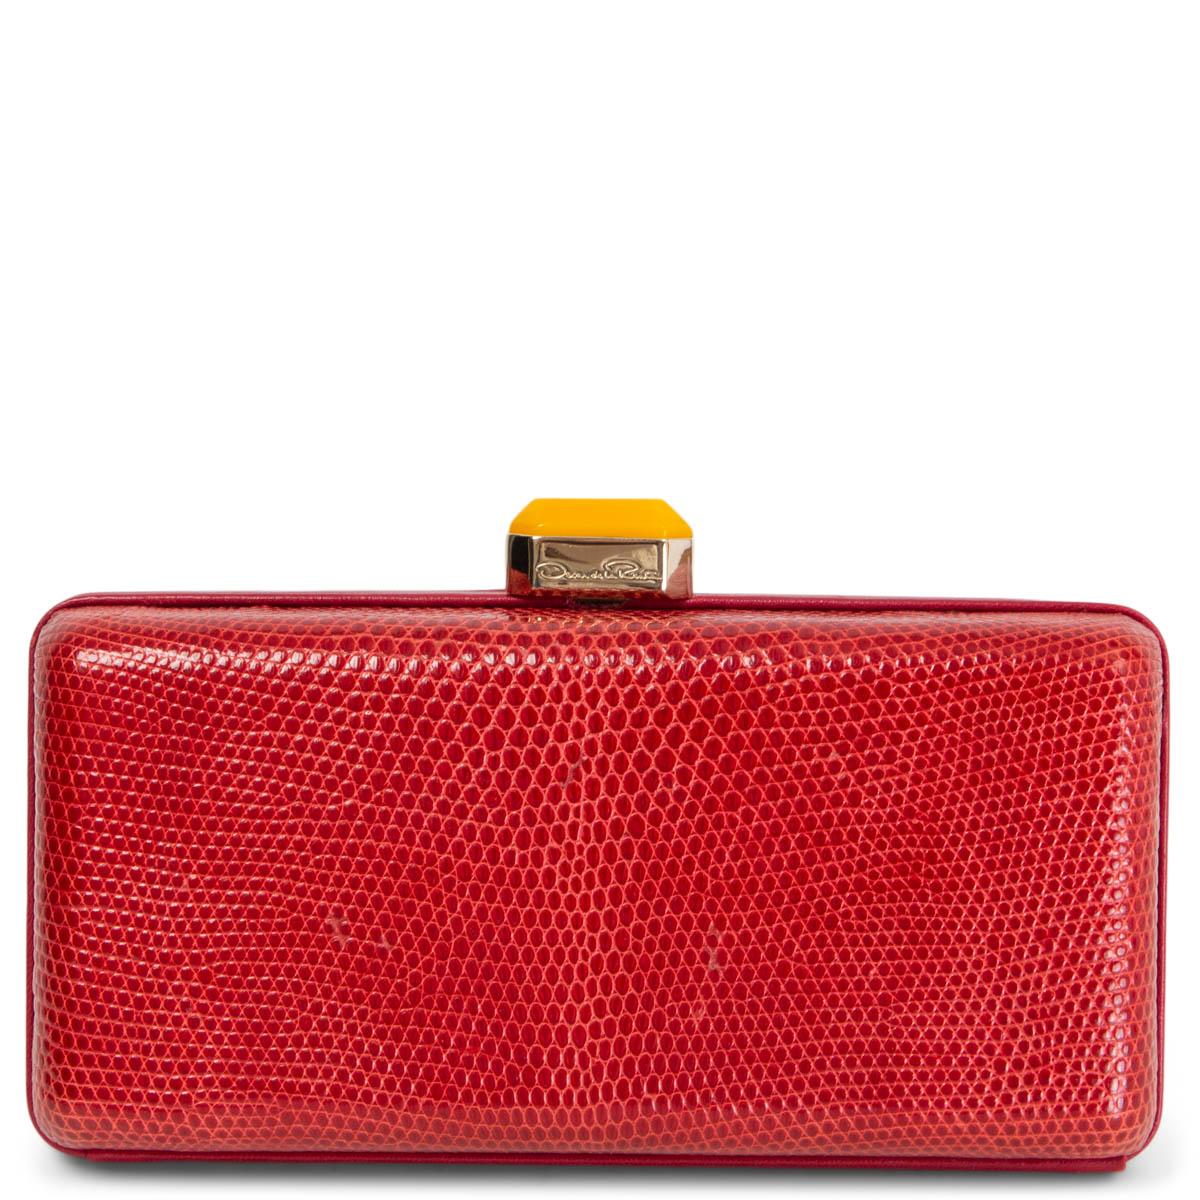 OSCAR DE LA RENTA rote LIZARD BOX Clutch Tasche (Rot) im Angebot